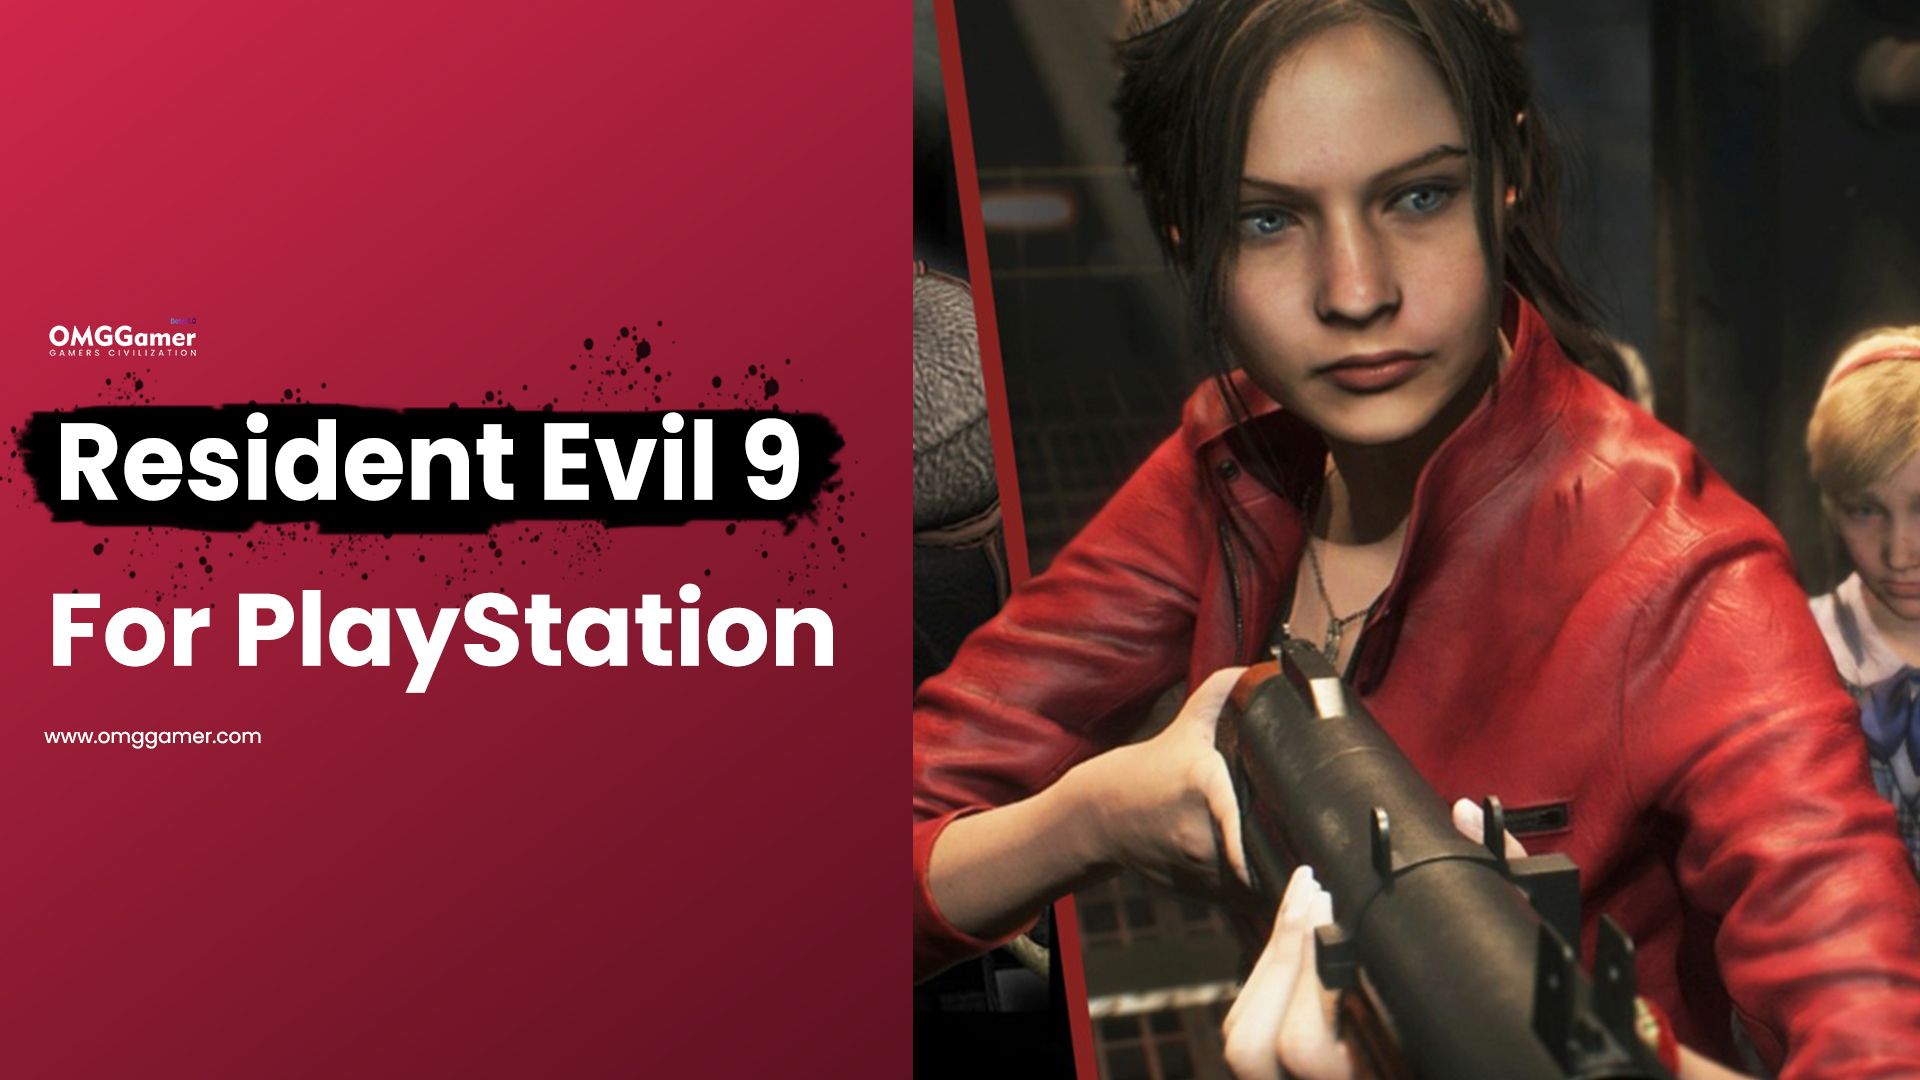 Resident Evil 9 for PlayStation